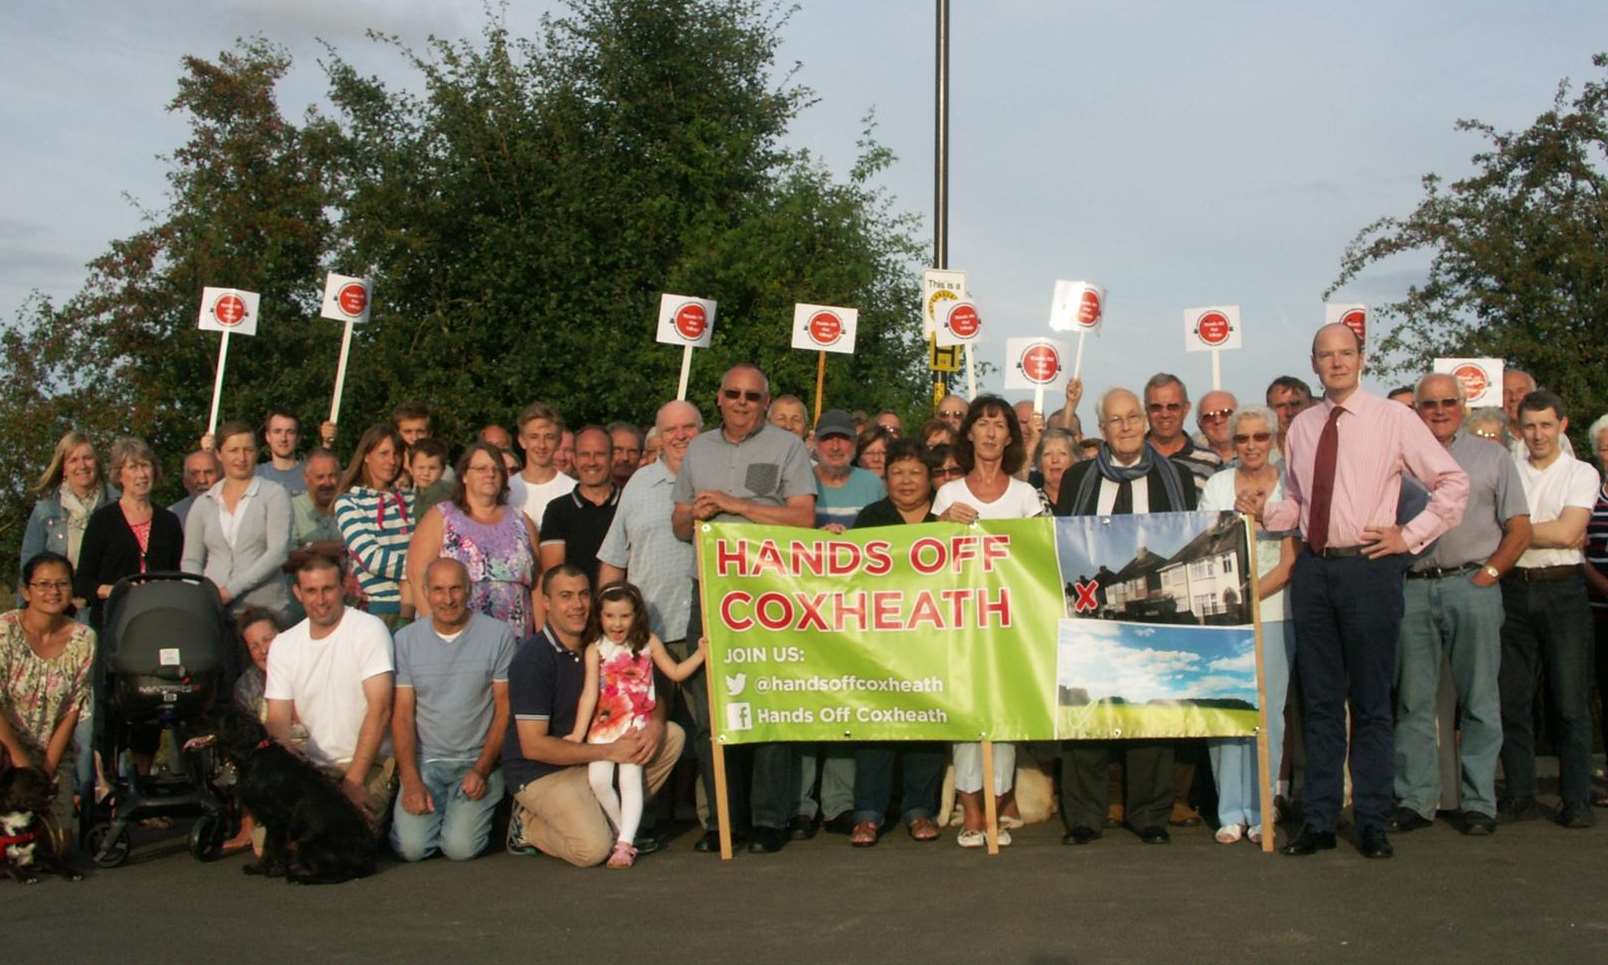 A previous Hands Off Coxheath protest